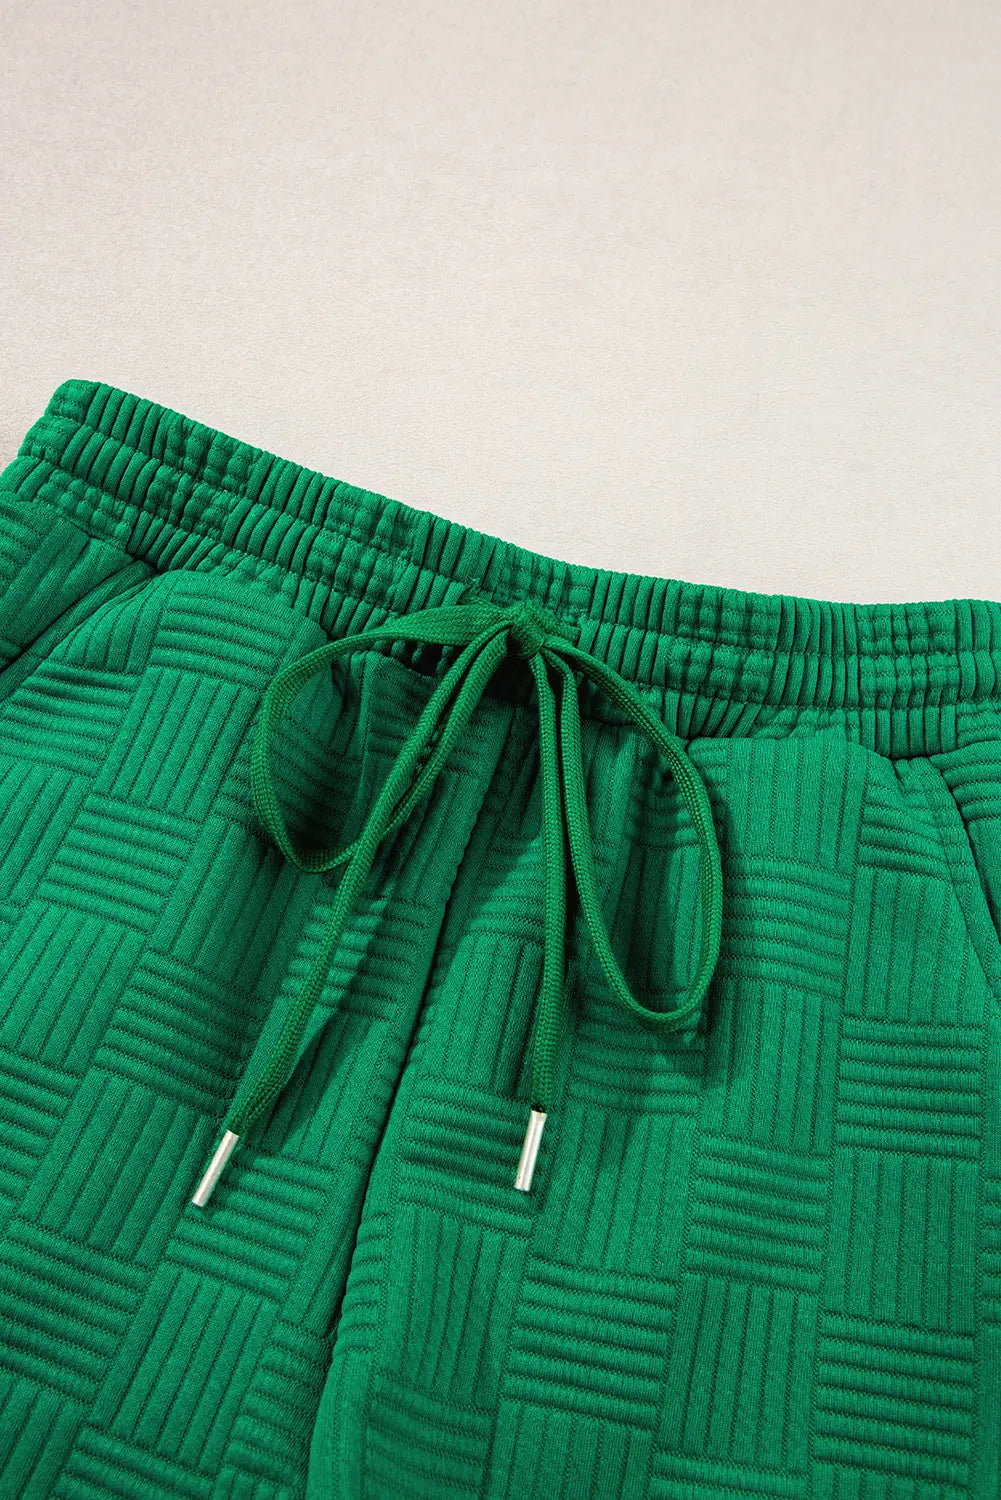 Jade tee and shorts set - two piece sets/short sets